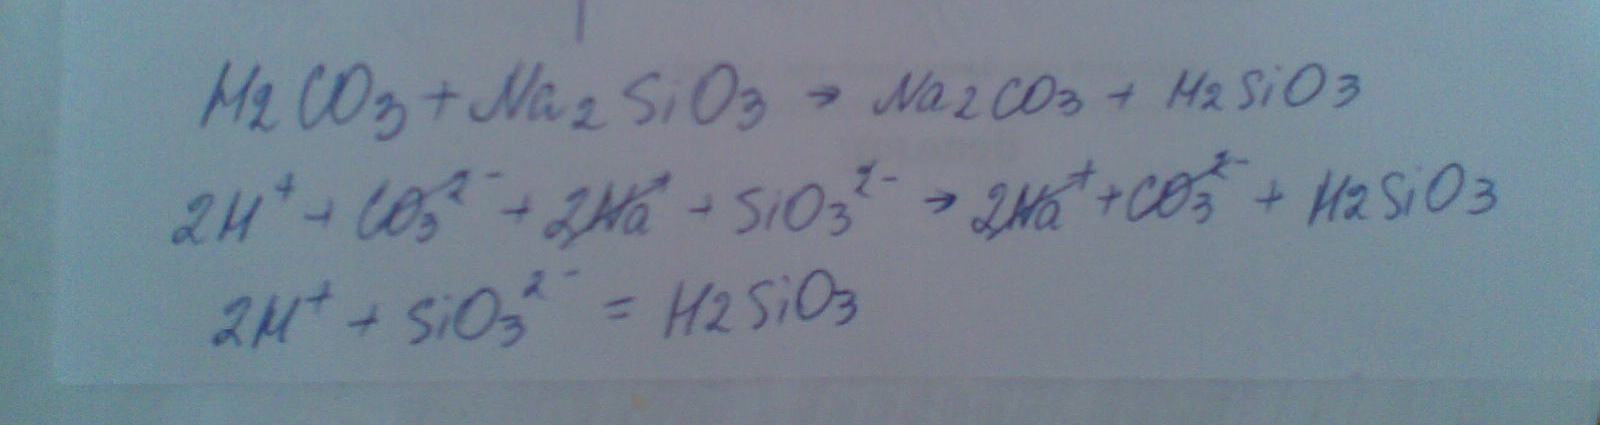 Fecl2 sio2 реакция. 2h sio3 h2sio3 молекулярное уравнение. H2sio3 прокалили.